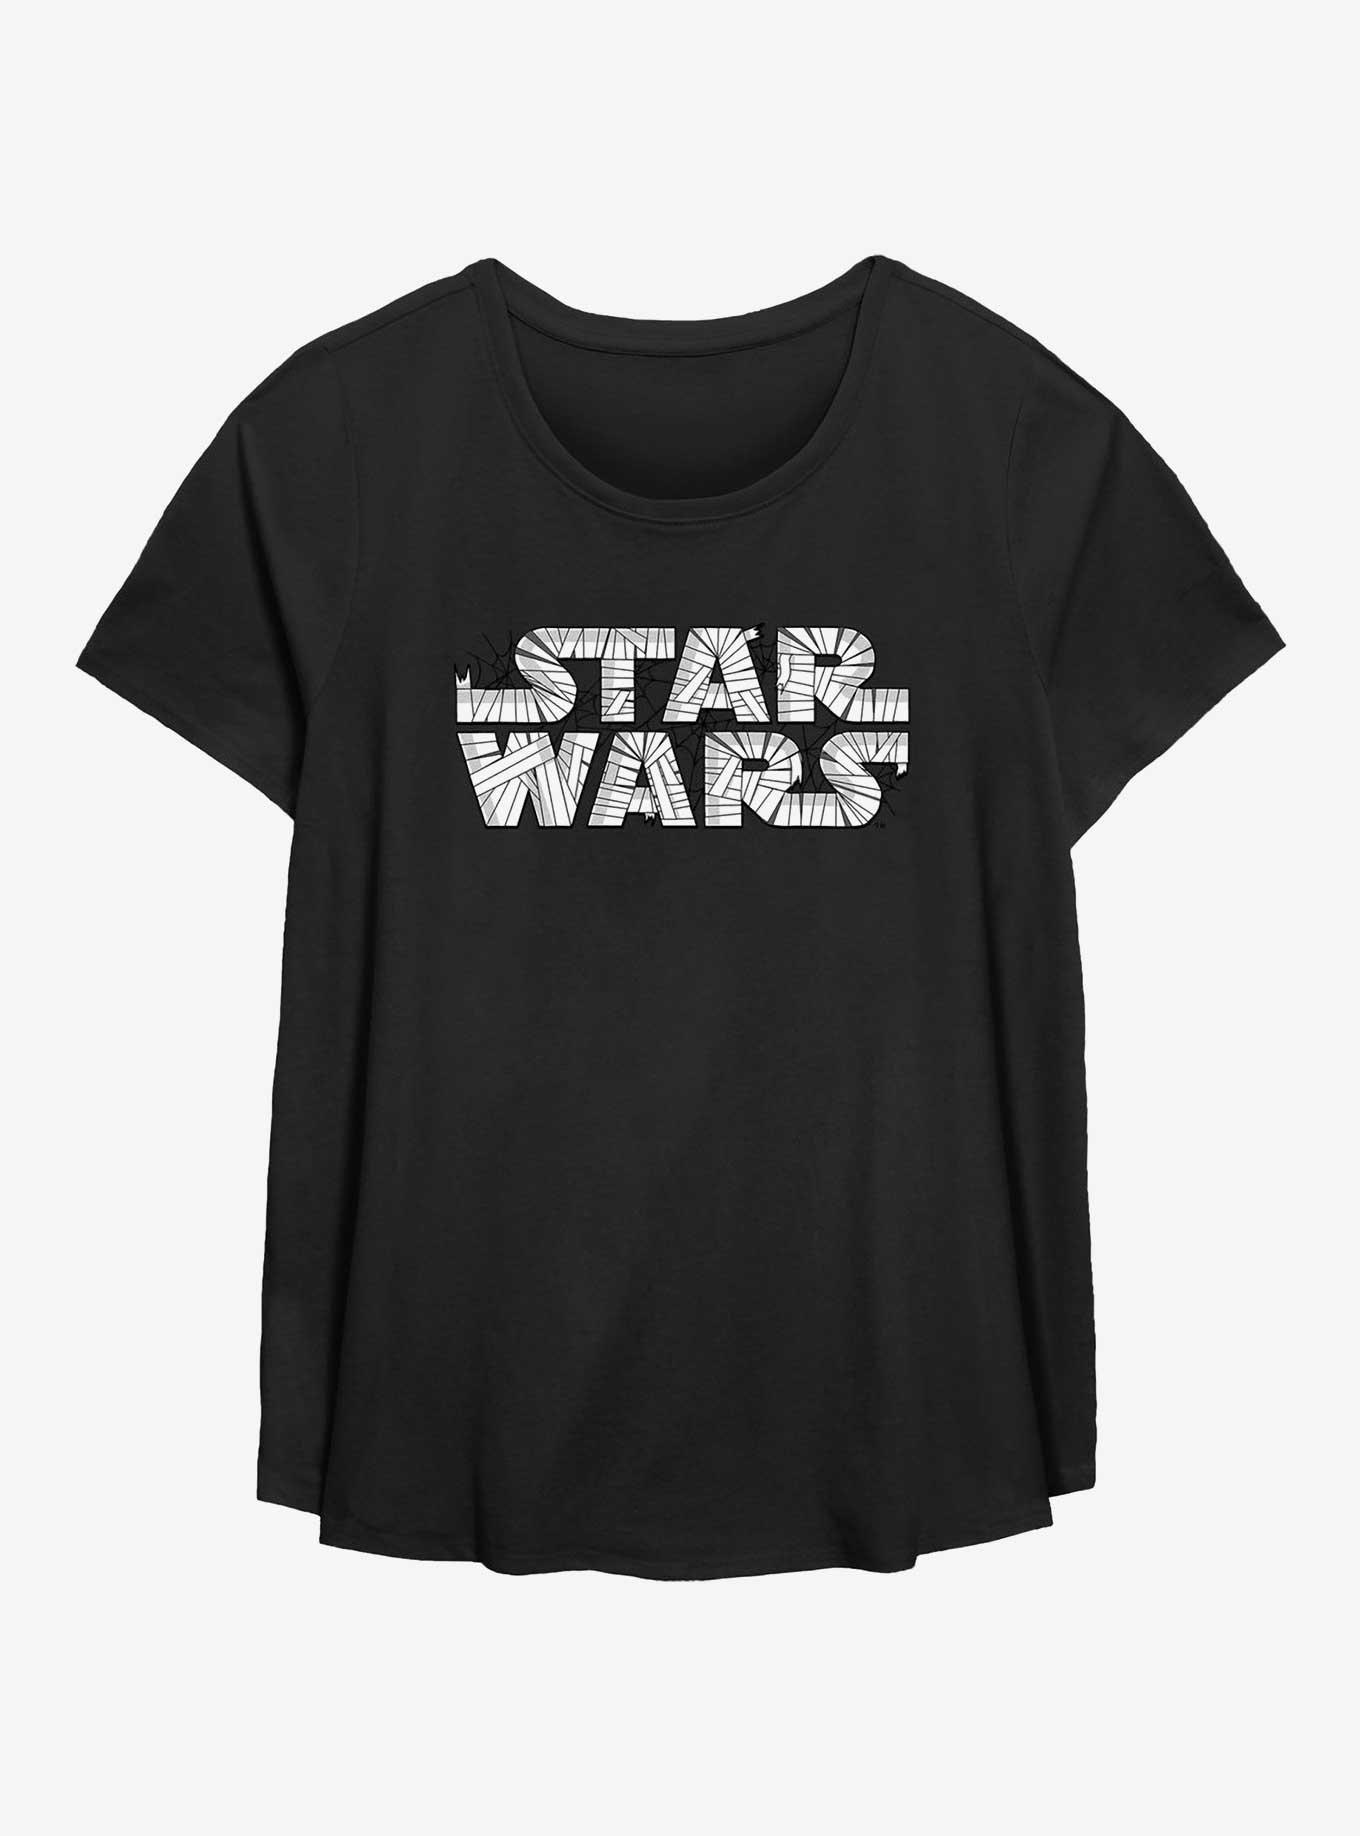 Star Wars Bandage-Wrapped Logo Girls T-Shirt Plus Size, BLACK, hi-res